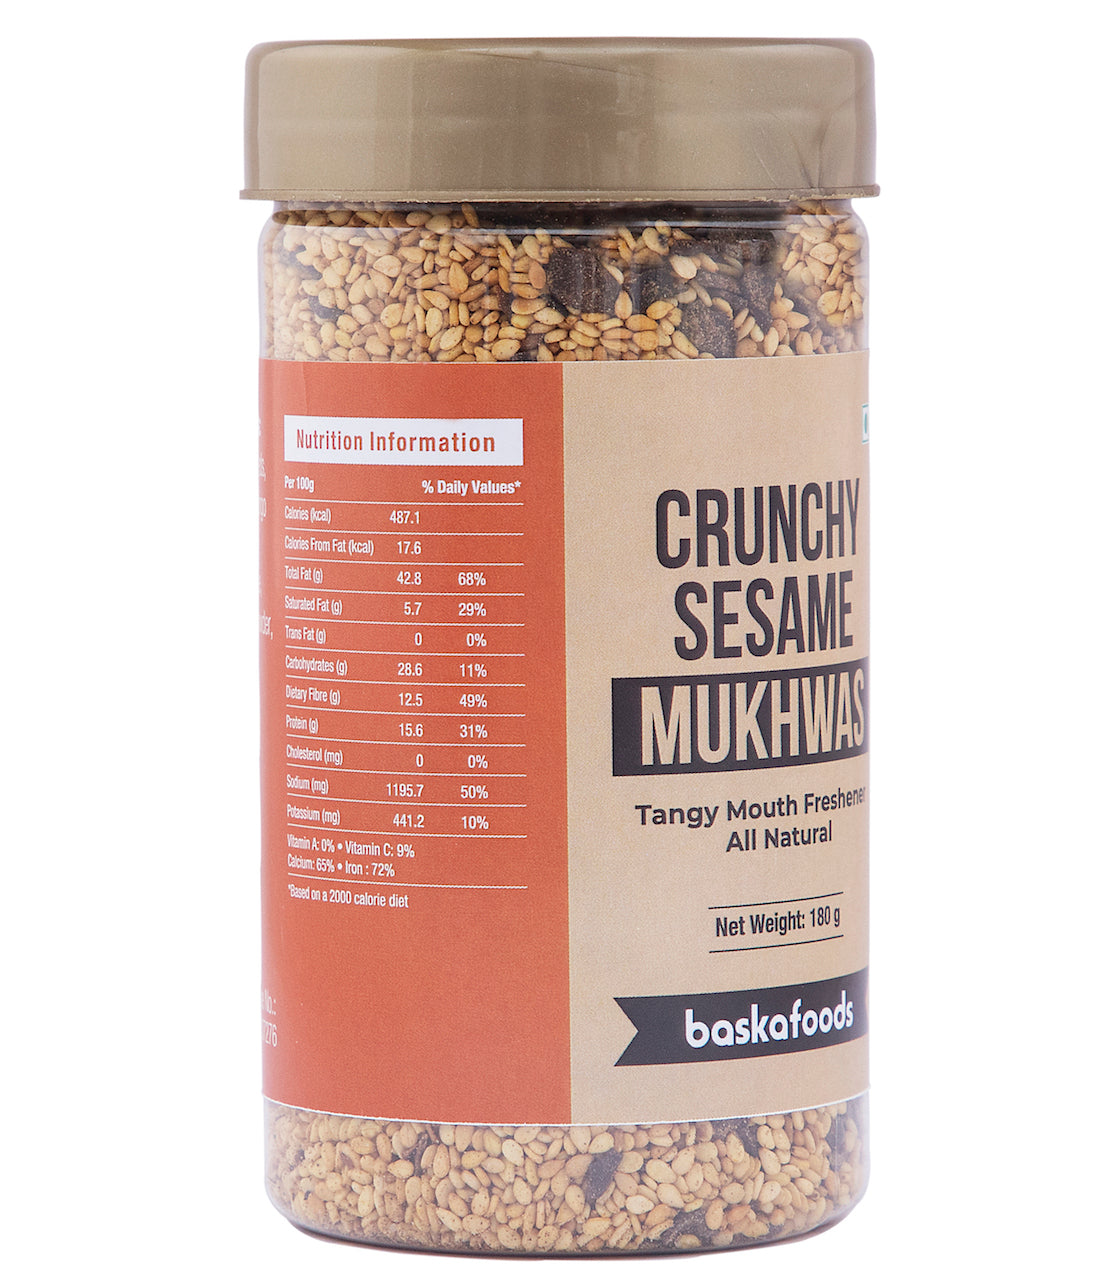 Crunchy Sesame Mukhwas